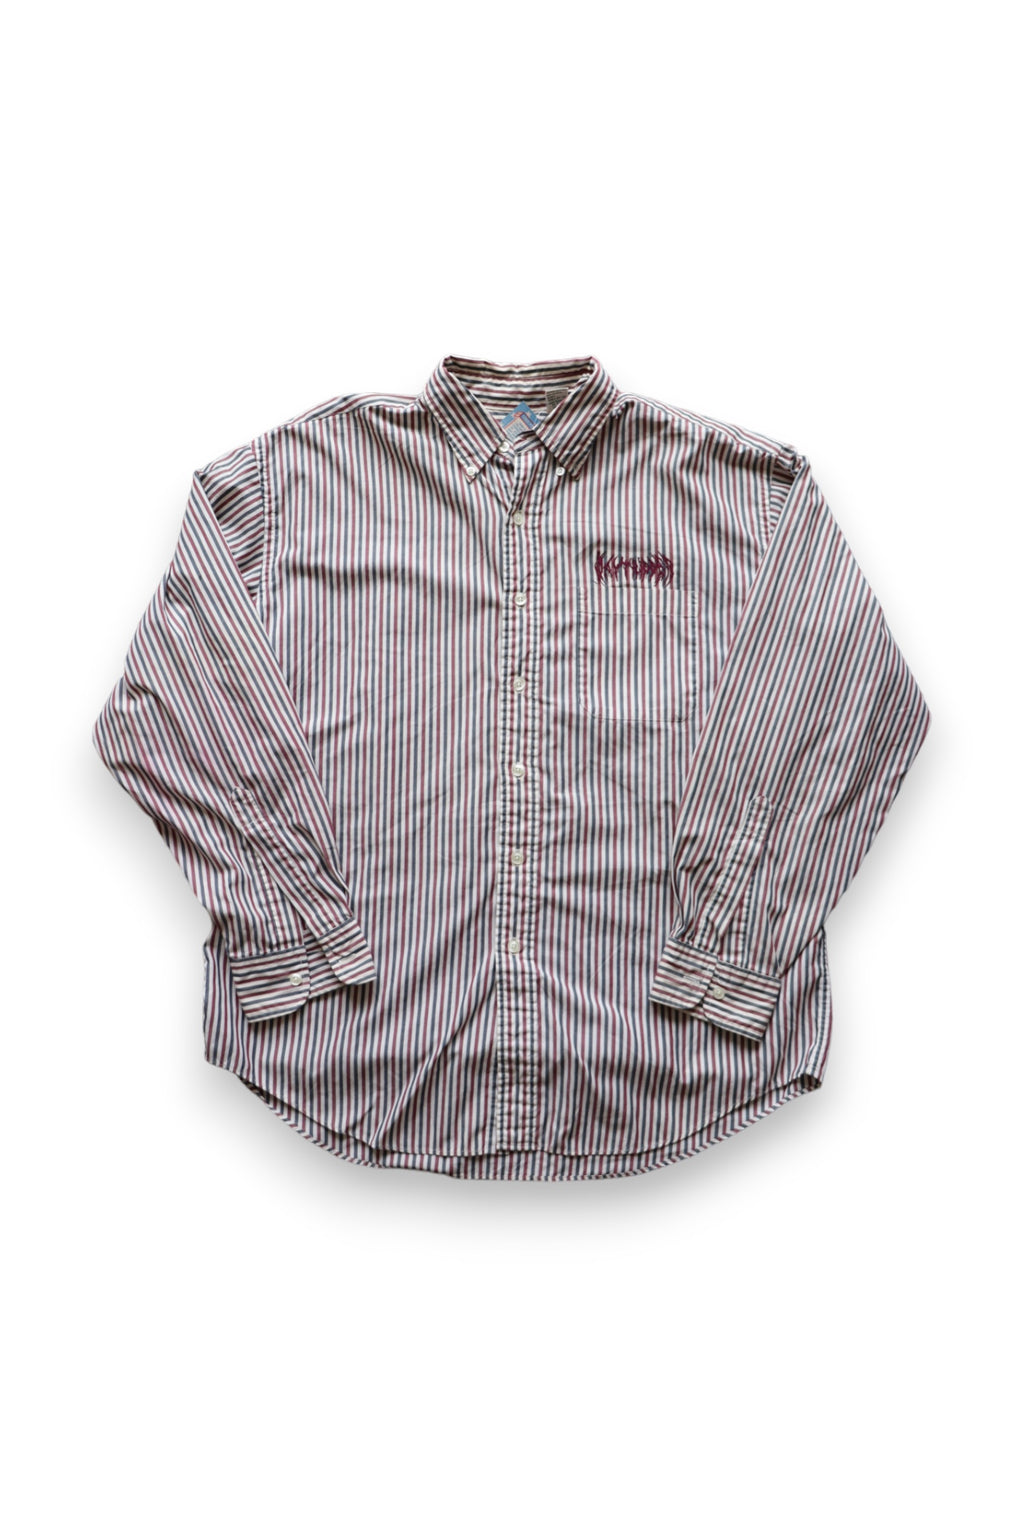 Striped Shirt - Large